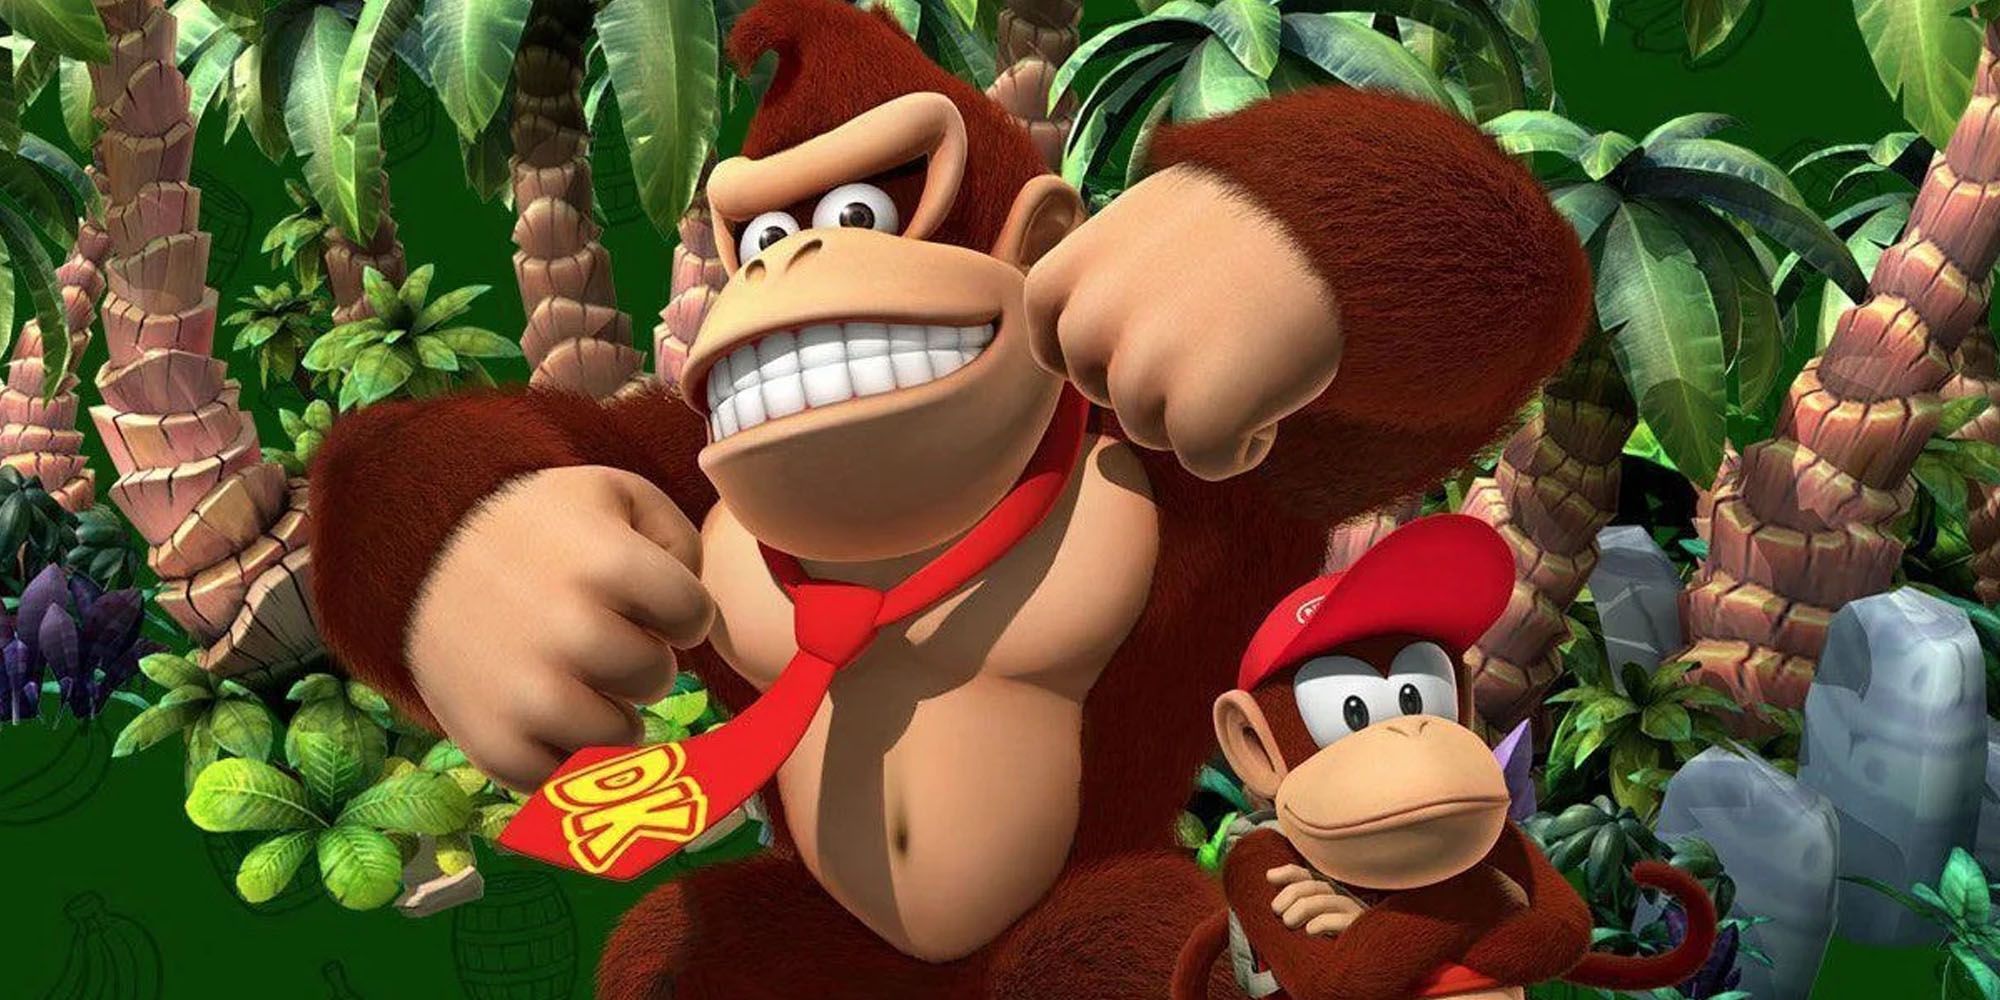 Nintendo's Donkey Kong